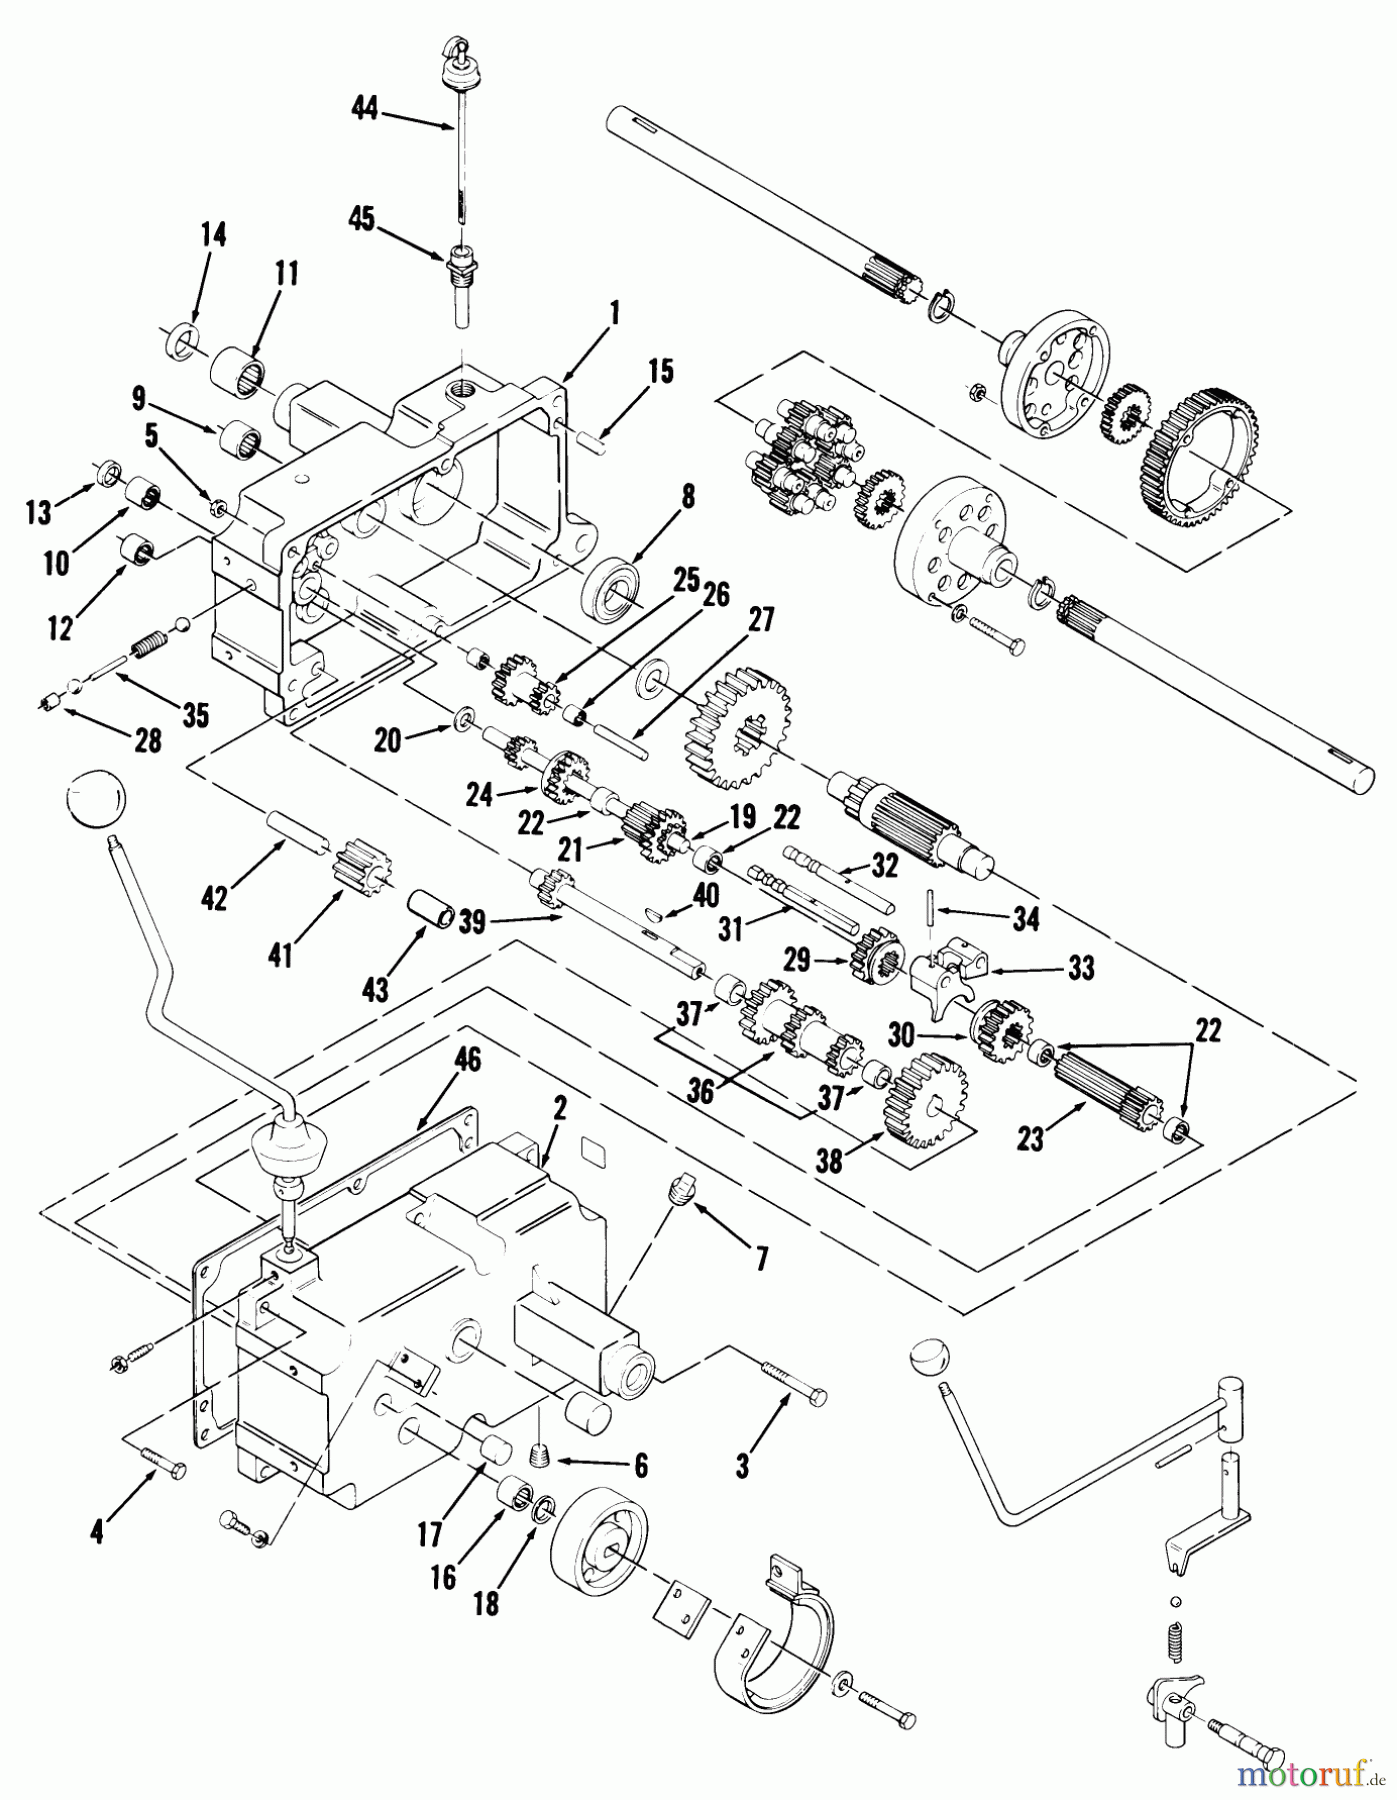  Toro Neu Mowers, Lawn & Garden Tractor Seite 1 01-17KS02 (C-175) - Toro C-175 Twin Automatic Tractor, 1980 MECHANICAL TRANSMISSION-8 SPEED #1